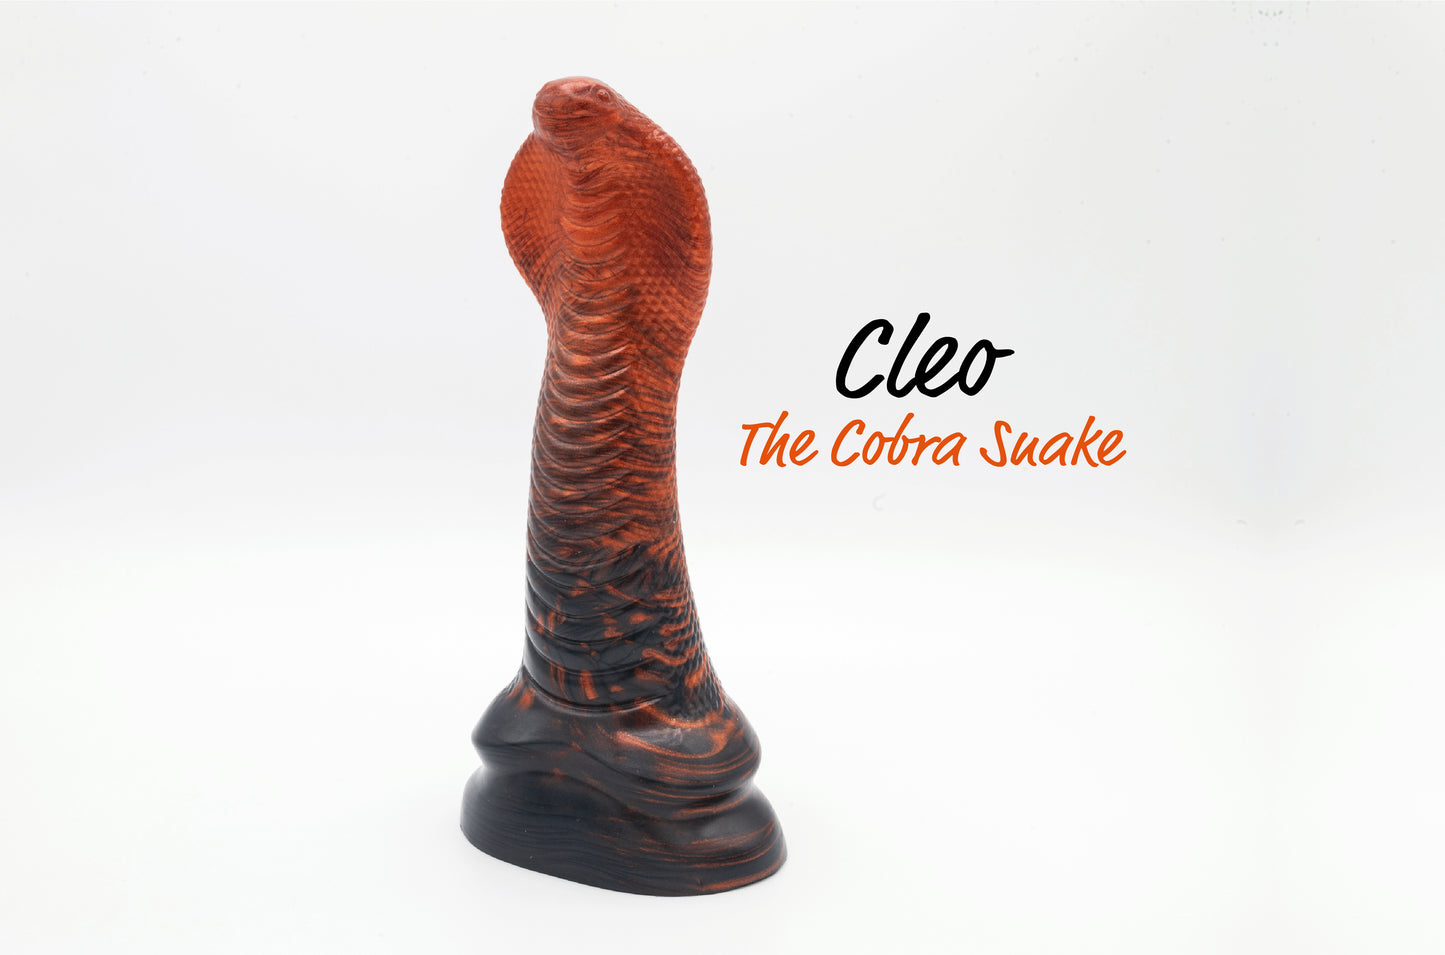 Cleo the Cobra Snake